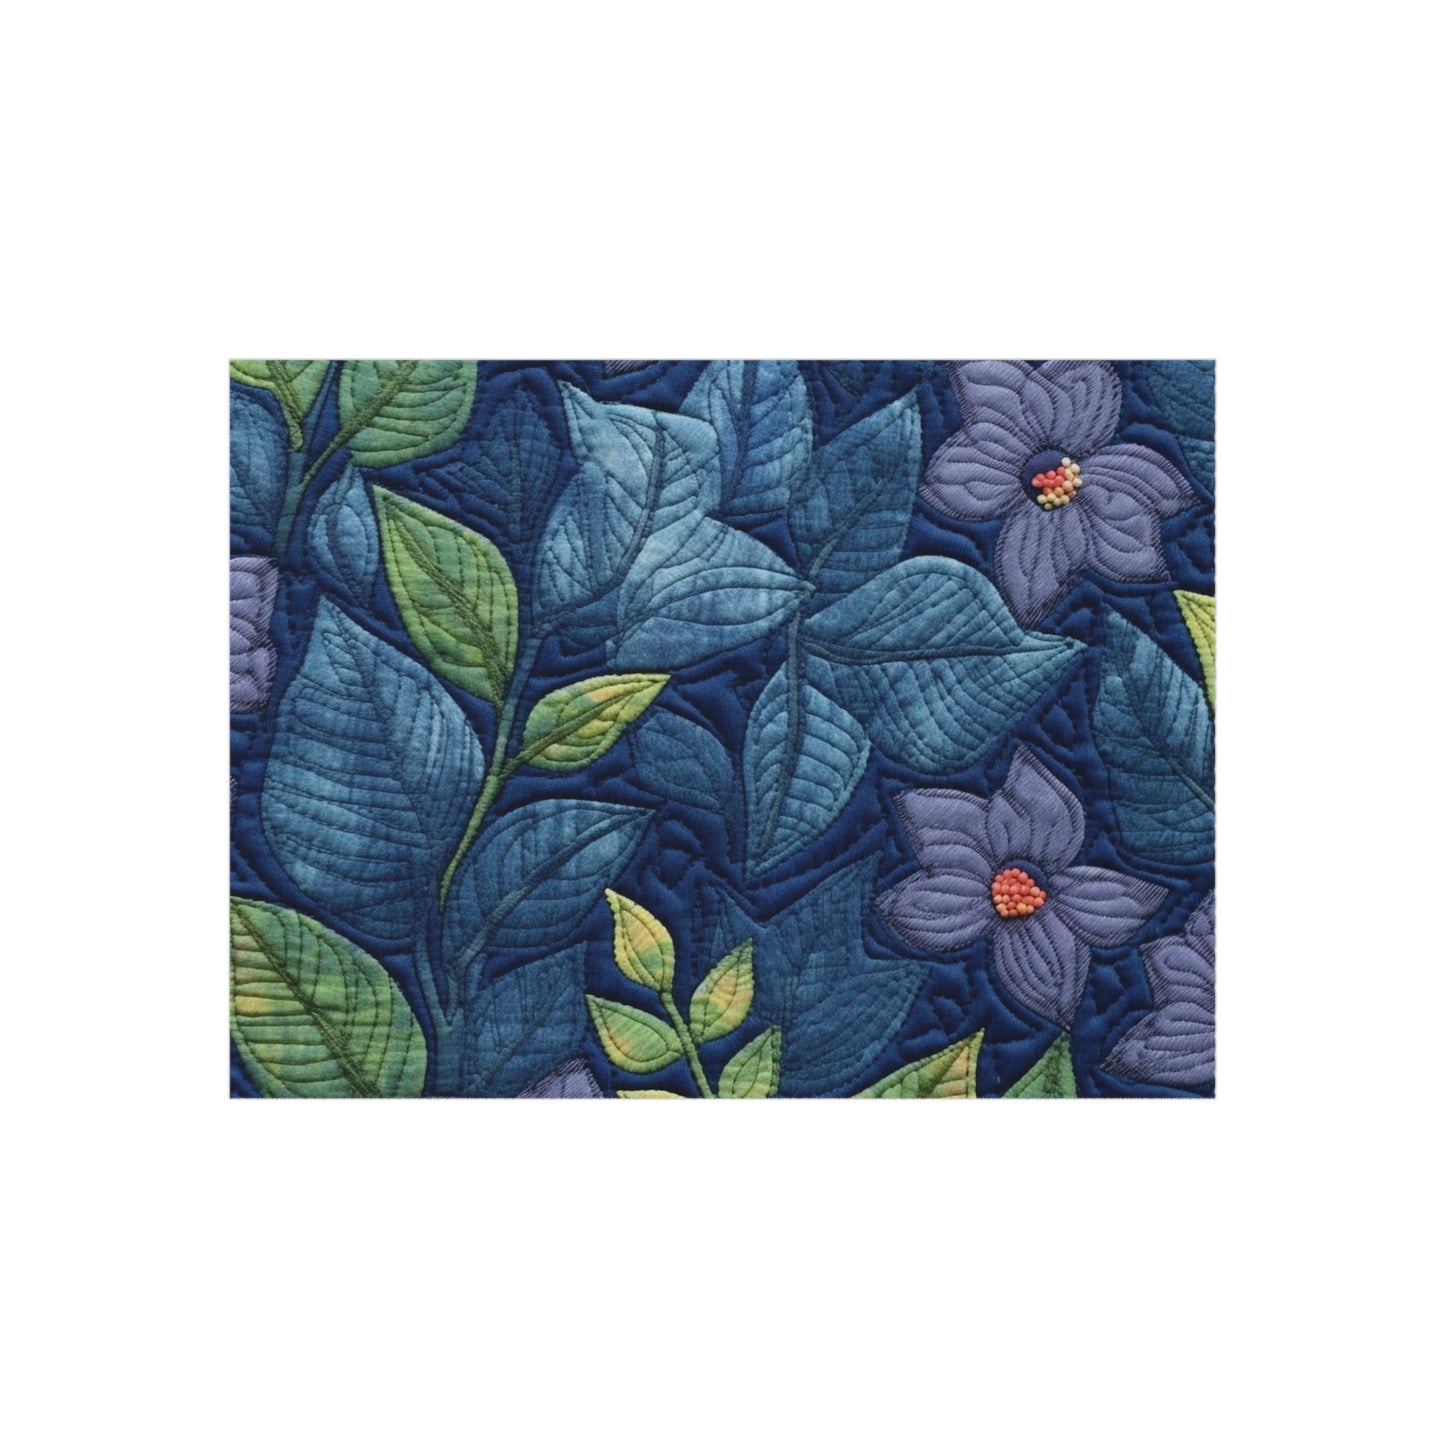 Floral Embroidery Blue: Denim-Inspired, Artisan-Crafted Flower Design - Outdoor Rug